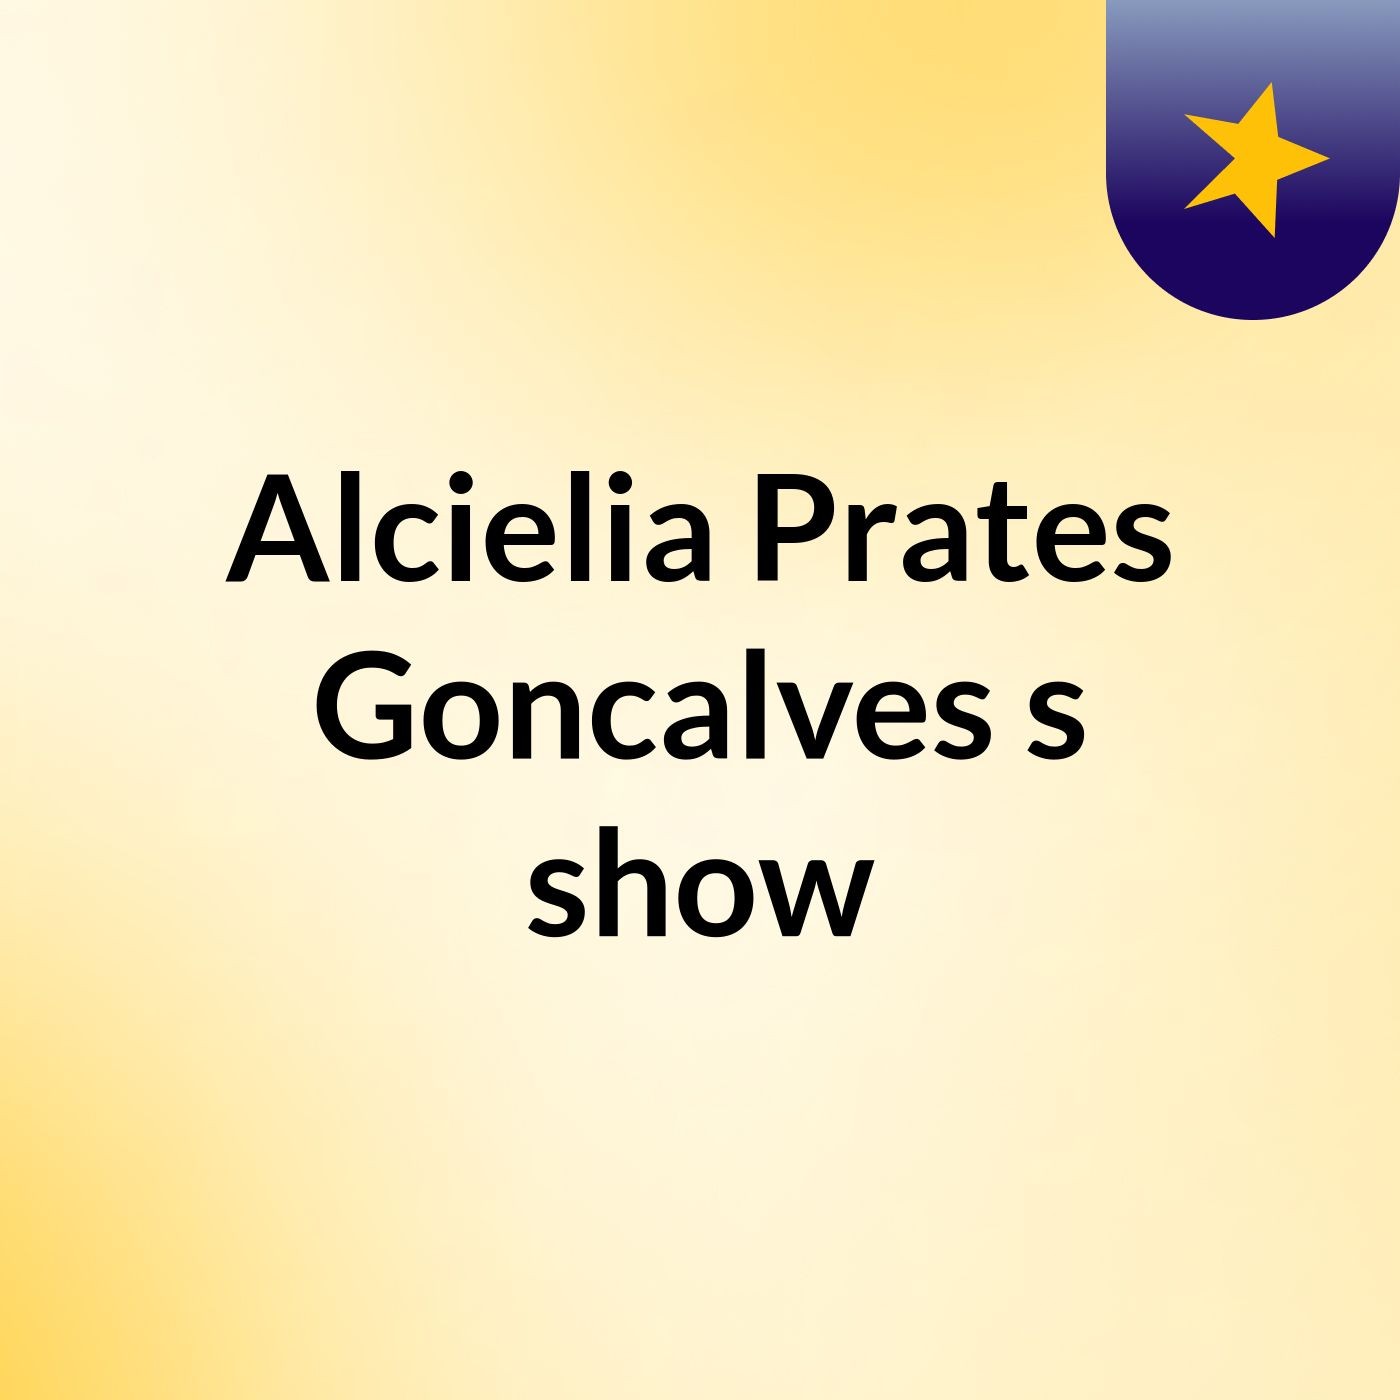 Alcielia Prates Goncalves's show